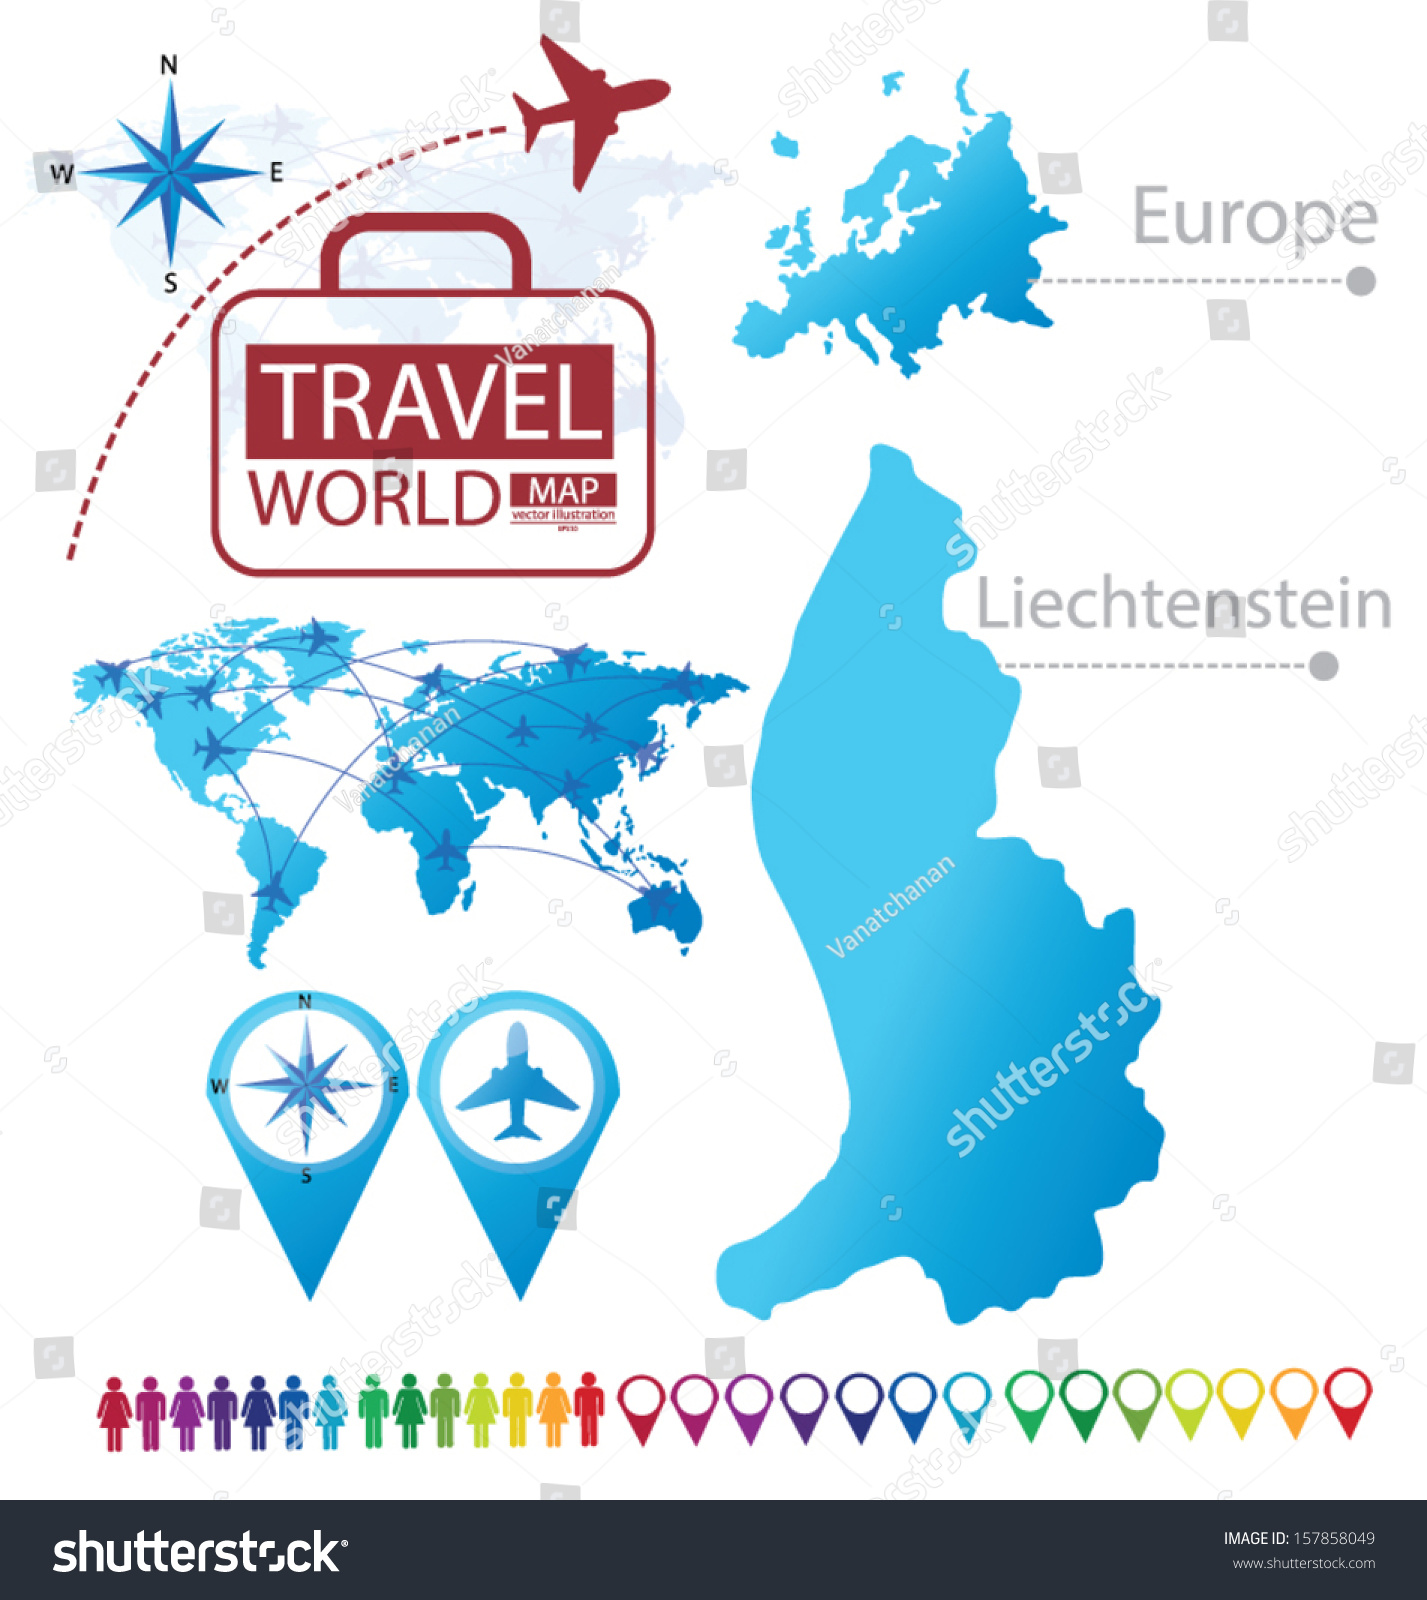 Liechtenstein Map Europe Modern Globe Travel Stock Vector Royalty